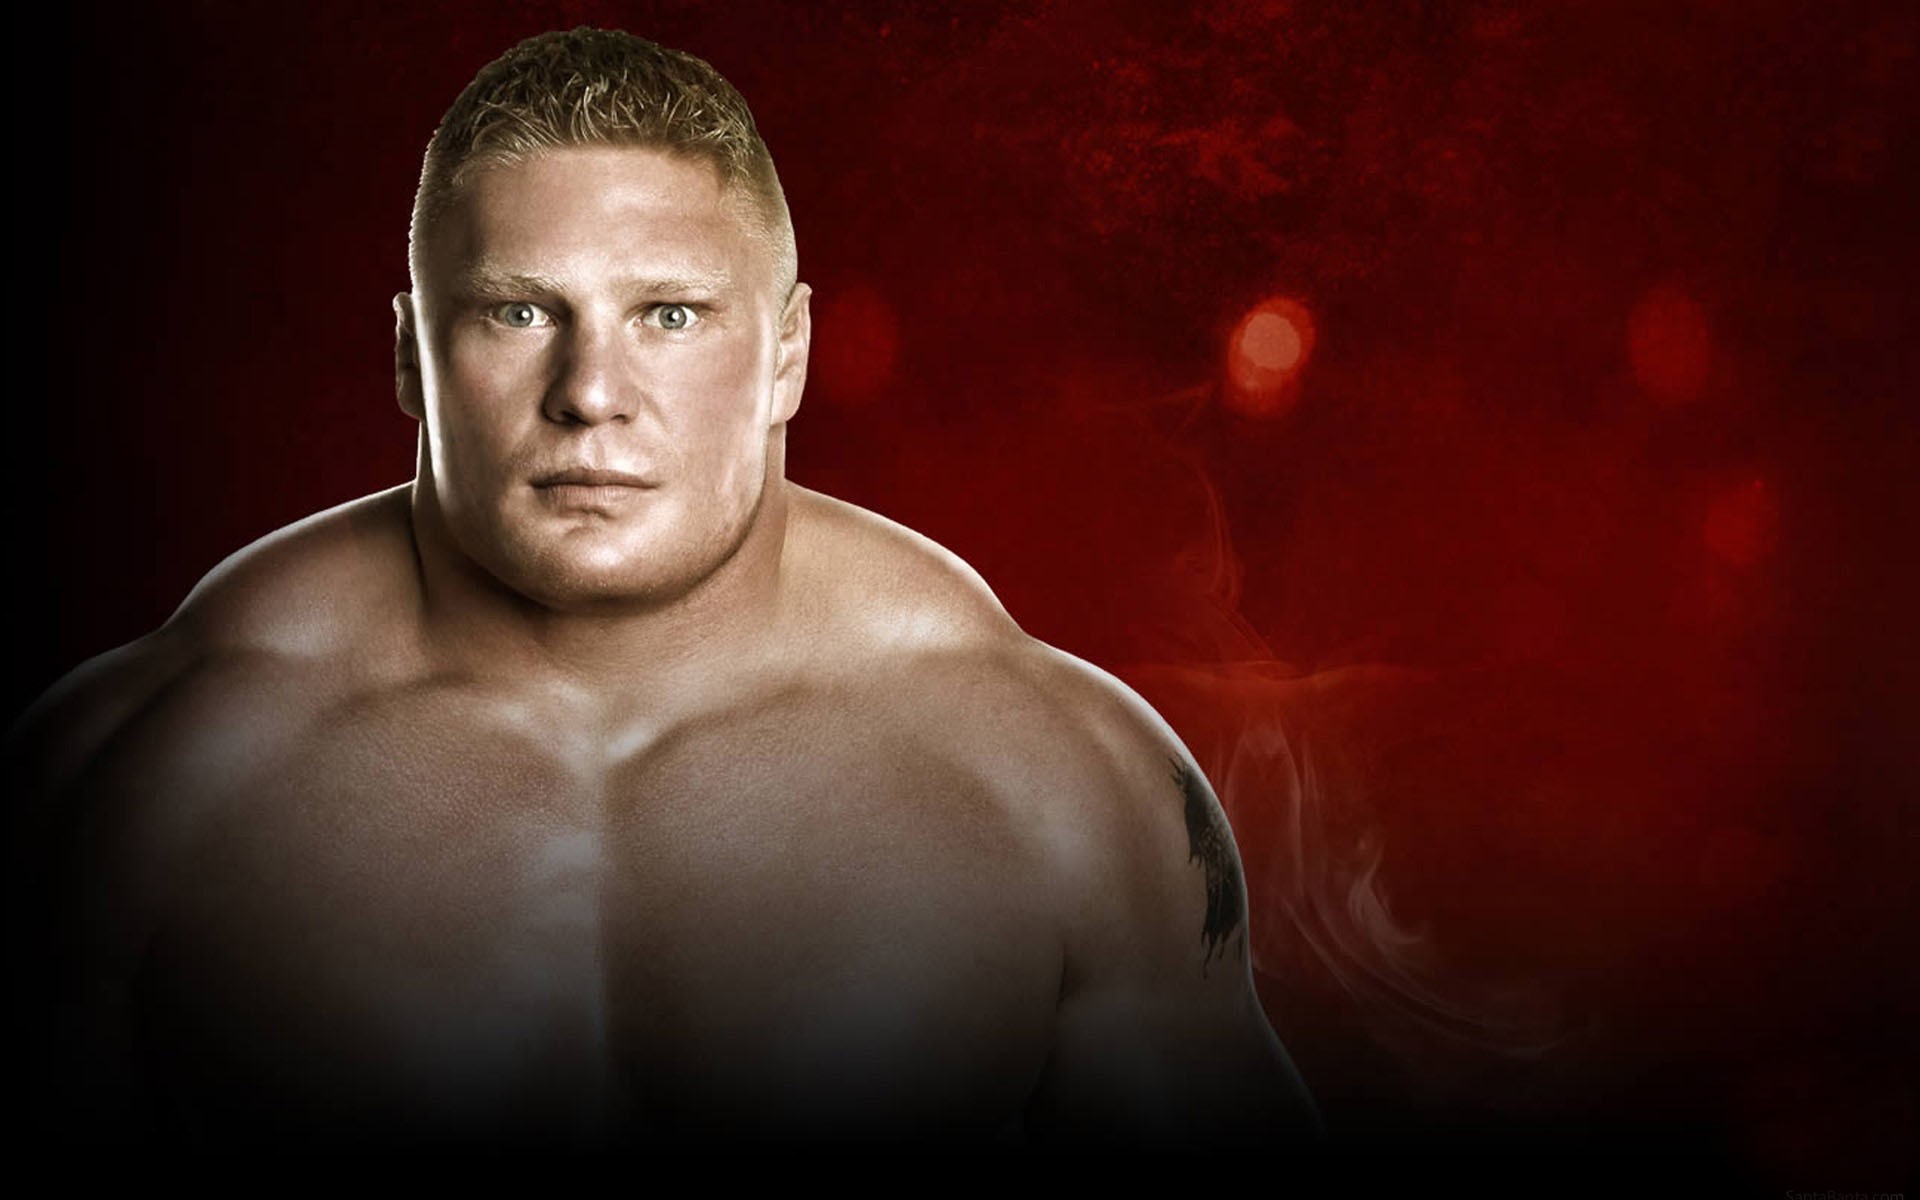 Brock Lesnar Poster featuring his WWE & UFC career photos. | Brock  lesnar, Brock lesnar wwe, Wrestling wwe